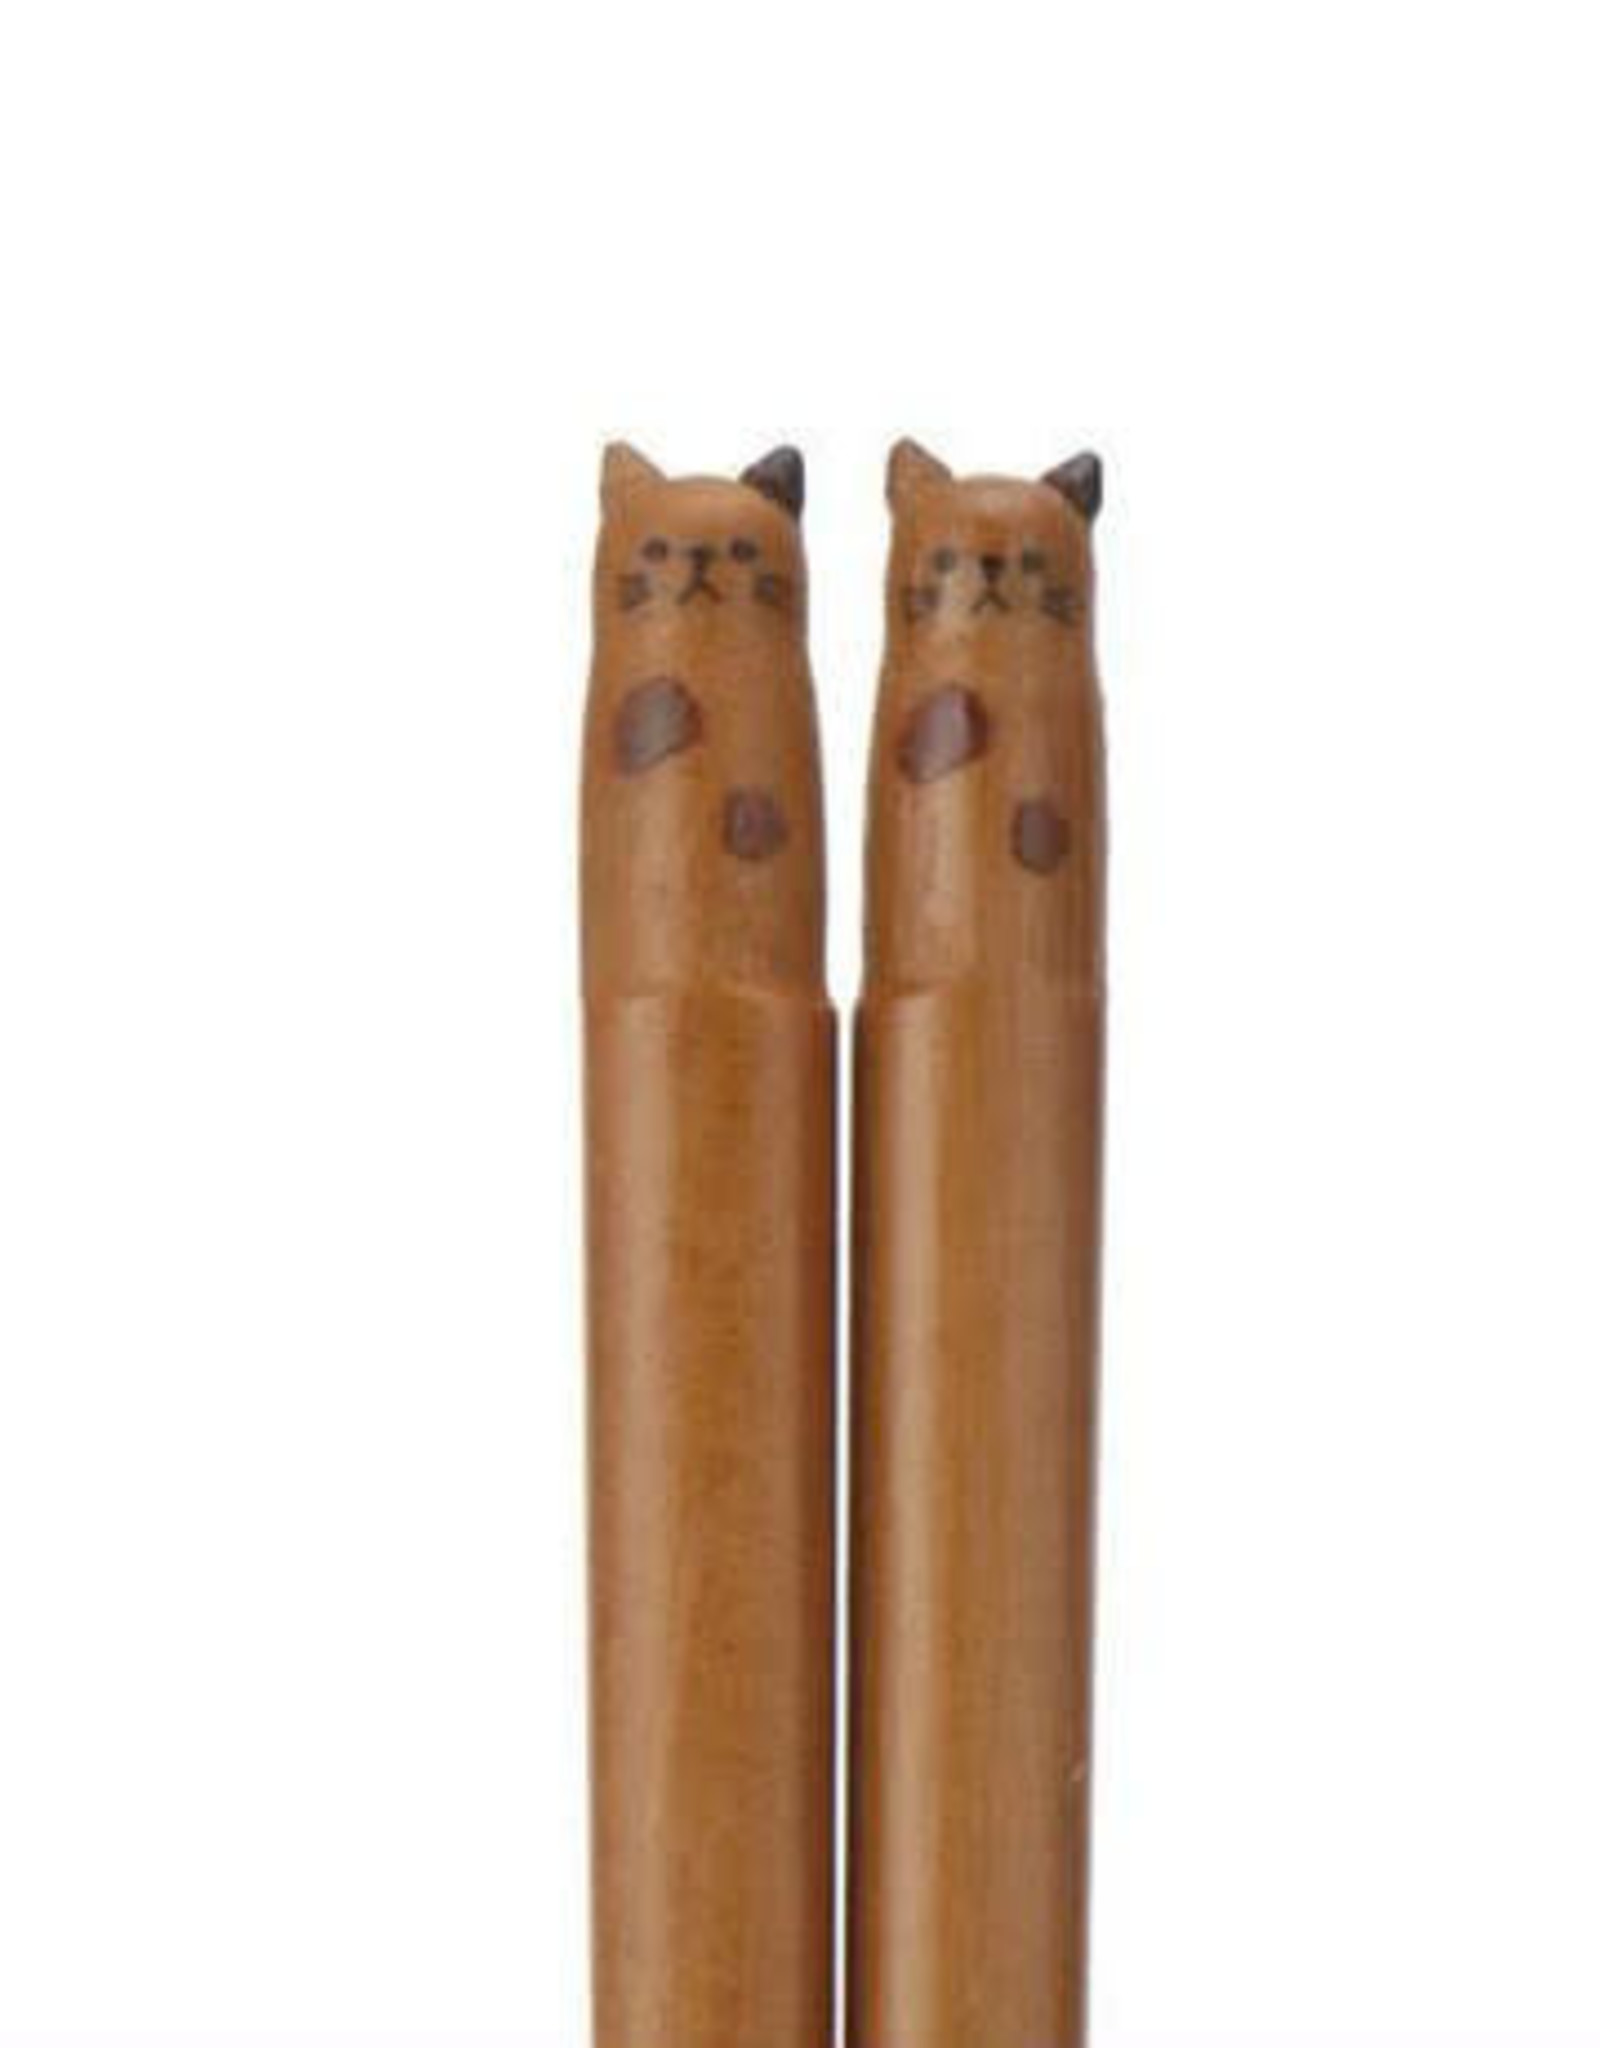 Shimoyama Co. Ltd Chopstick Set - Cats